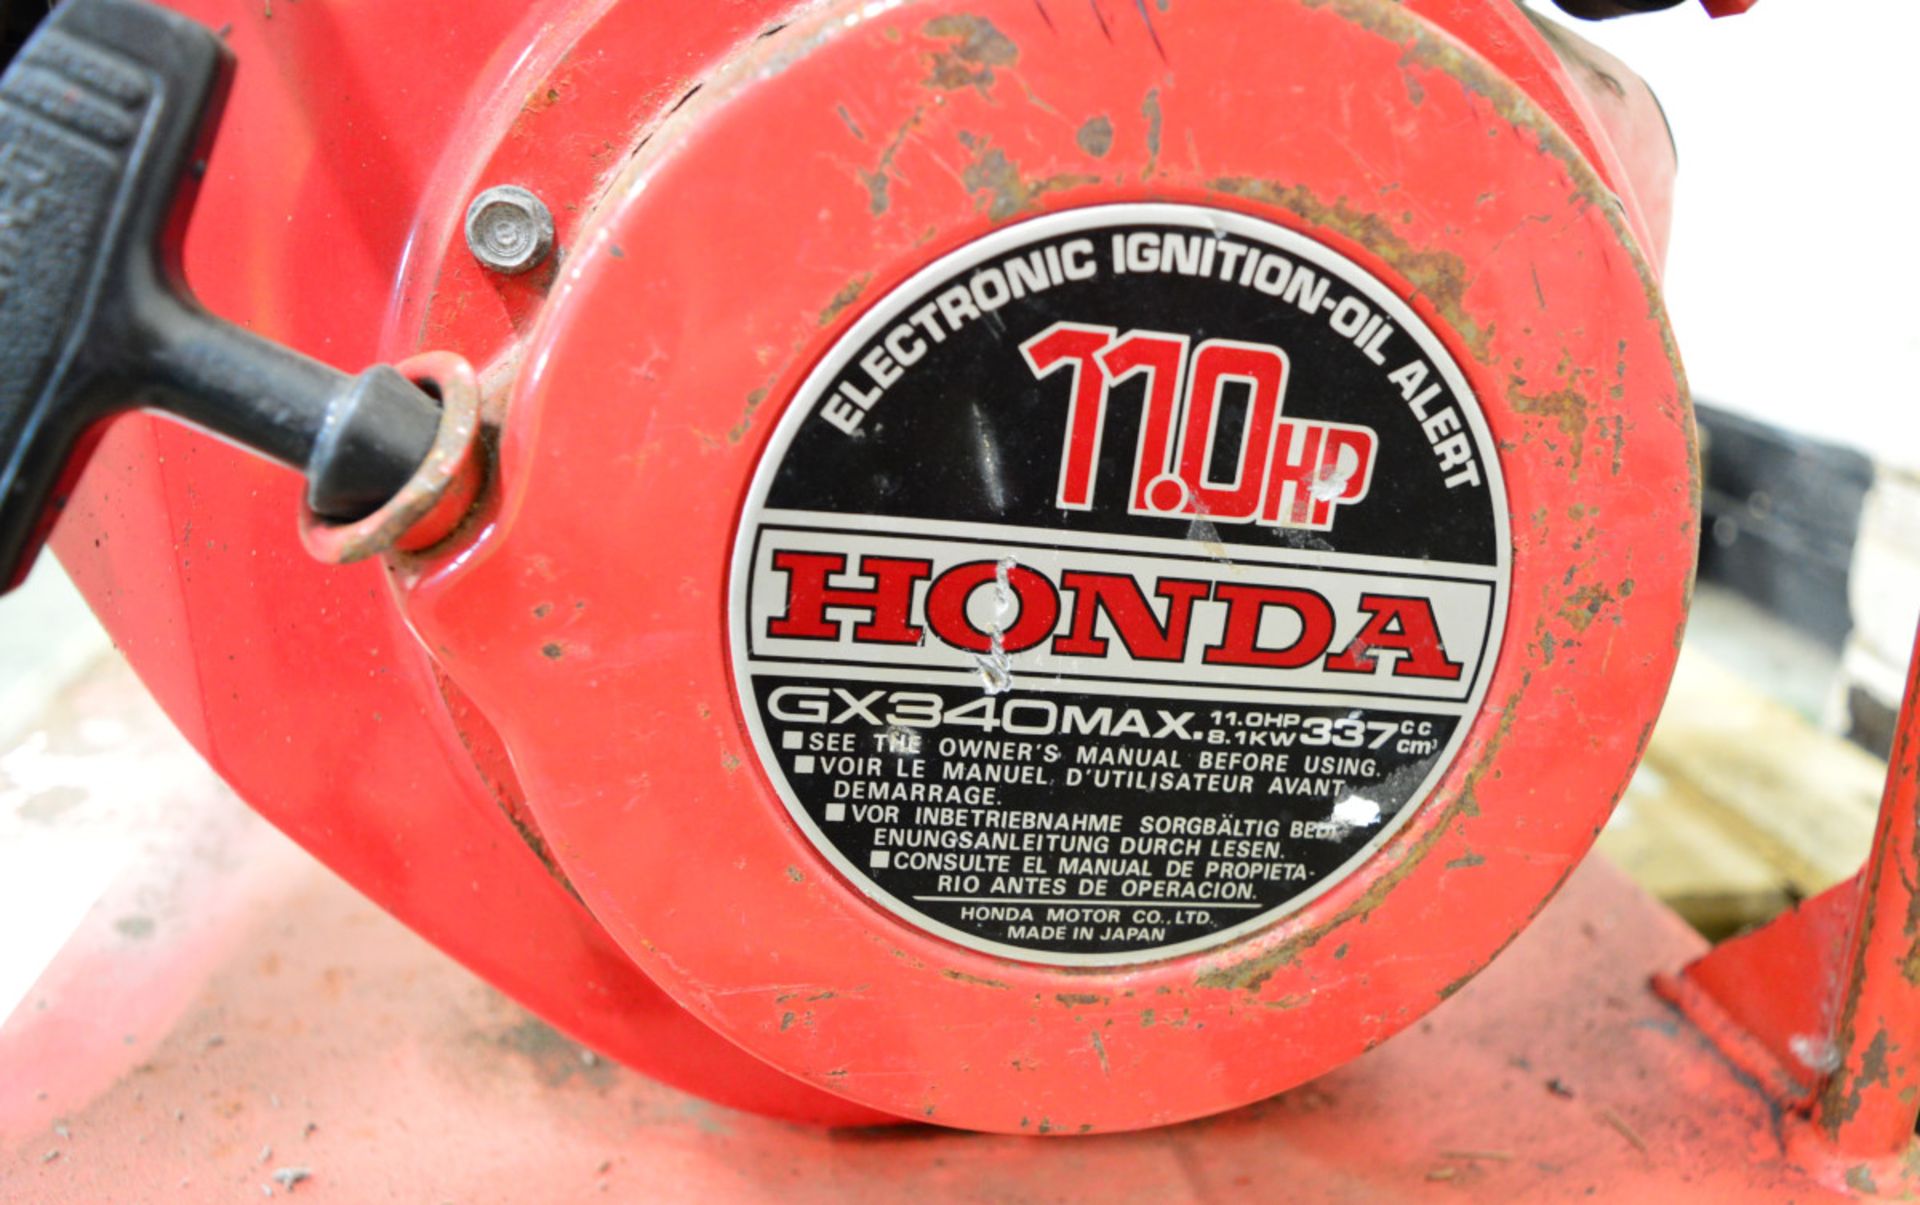 Haverhill 5KVA Petrol Generator 110V 50Hz 45.5A Honda 11HP Engine - Image 3 of 3